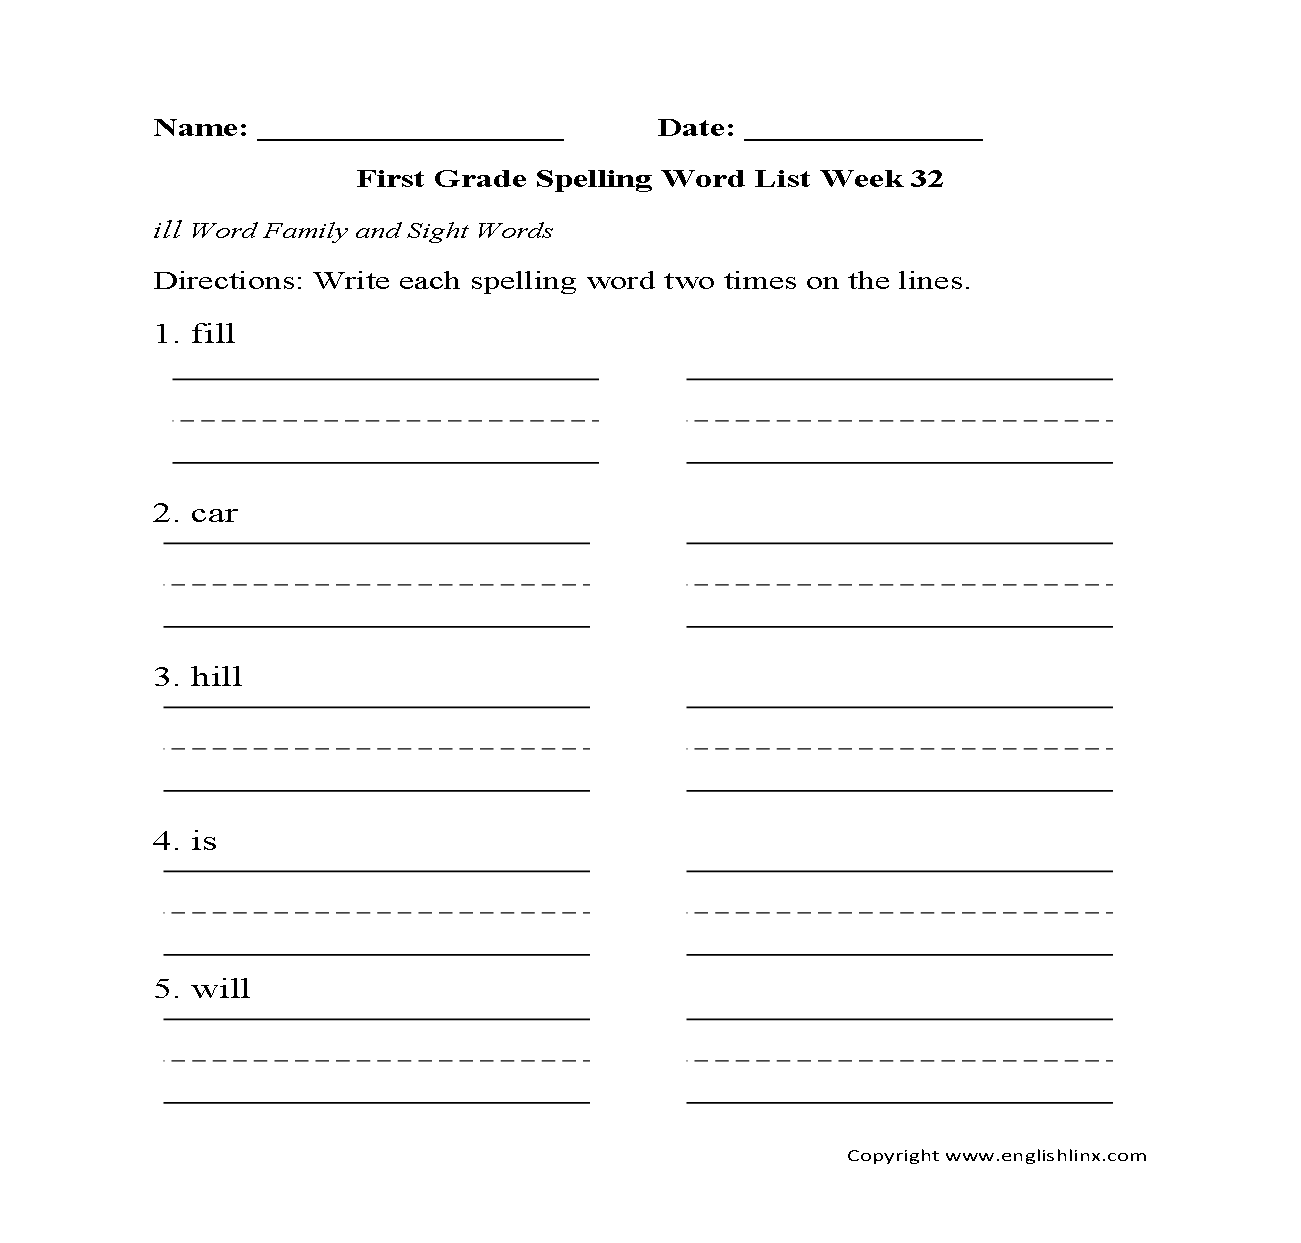 Week 32 ill family First Grade Spelling Words Worksheet